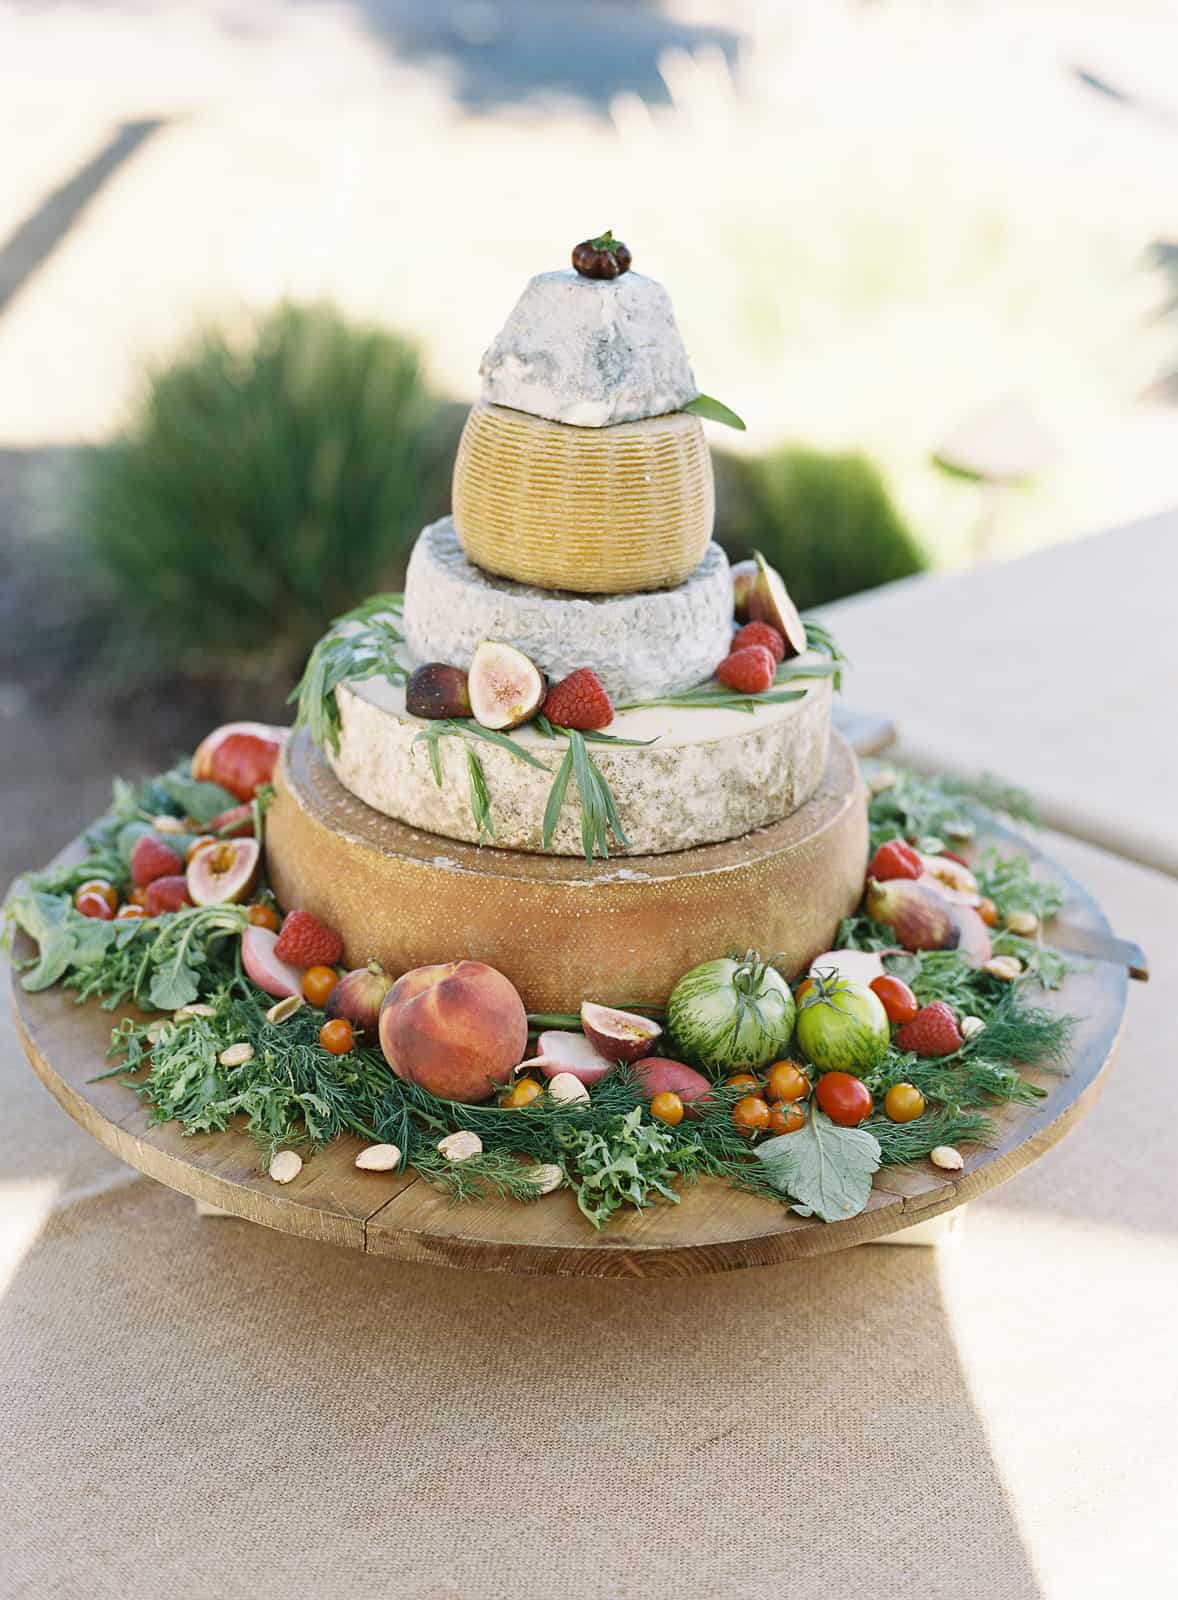 cake made of cheese wheels